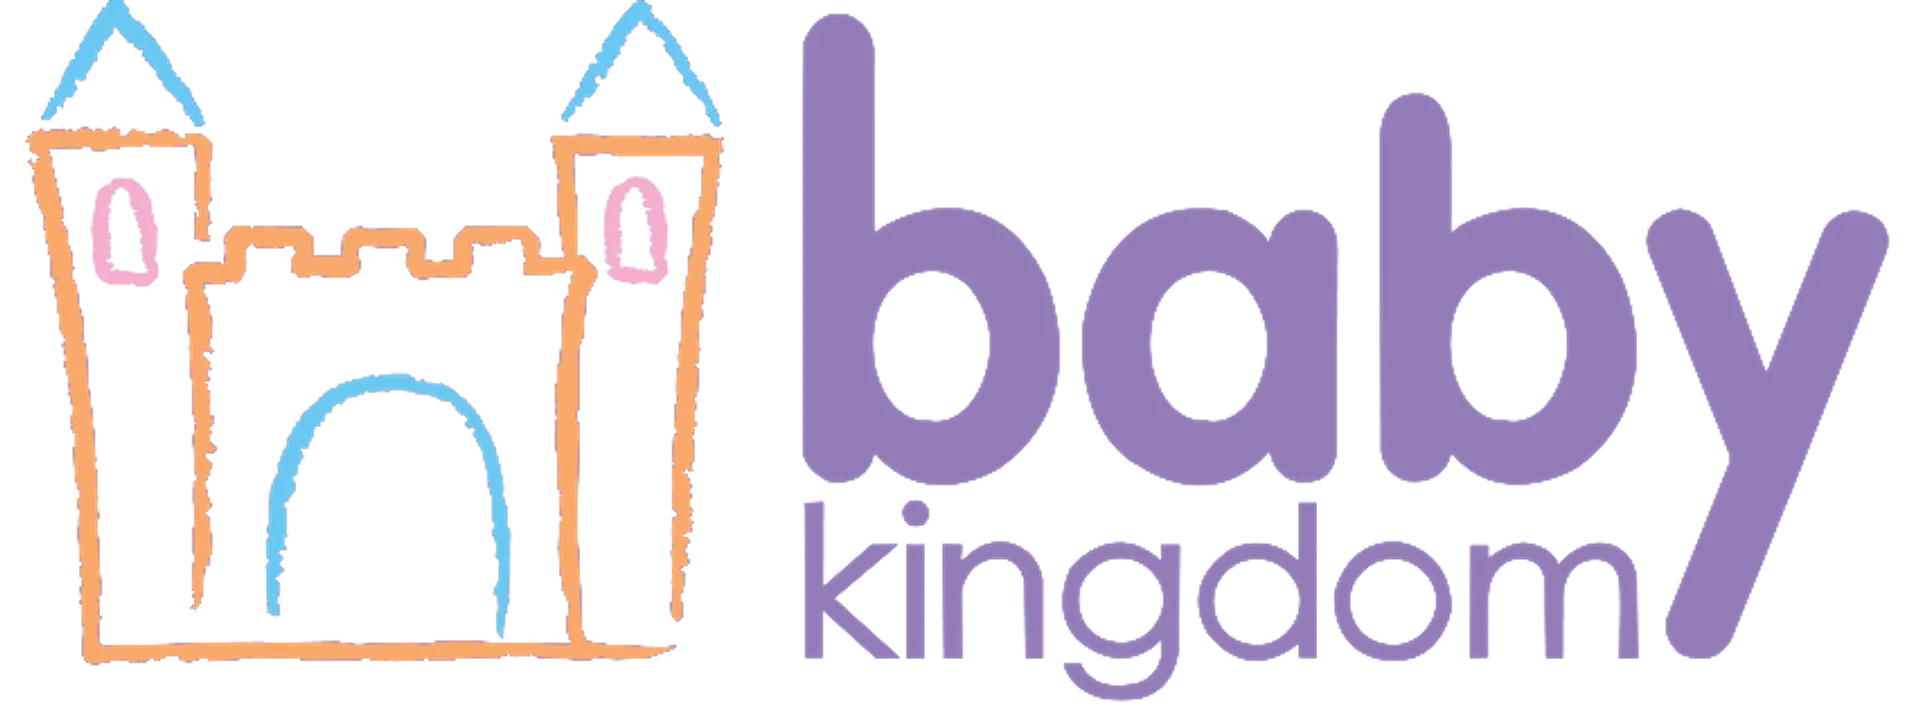 BABY KINGDOM logo of current catalogue